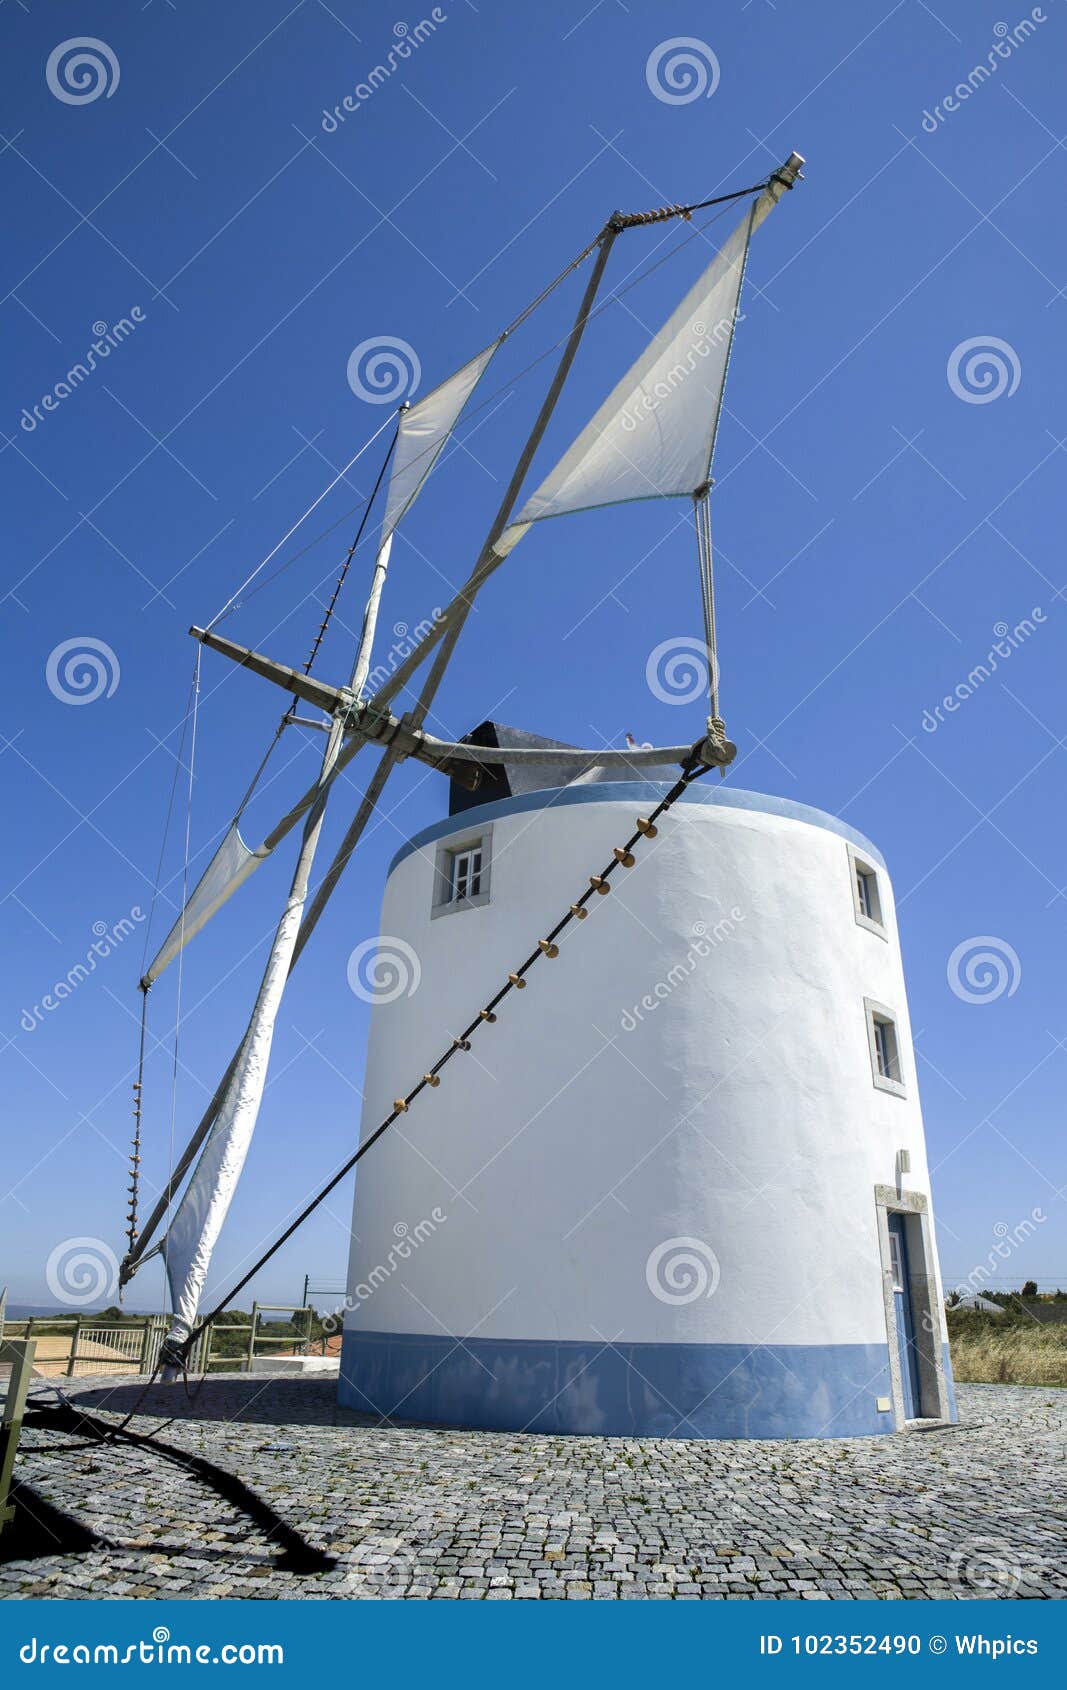 windmill belong to sesimbra countryside region, portugal